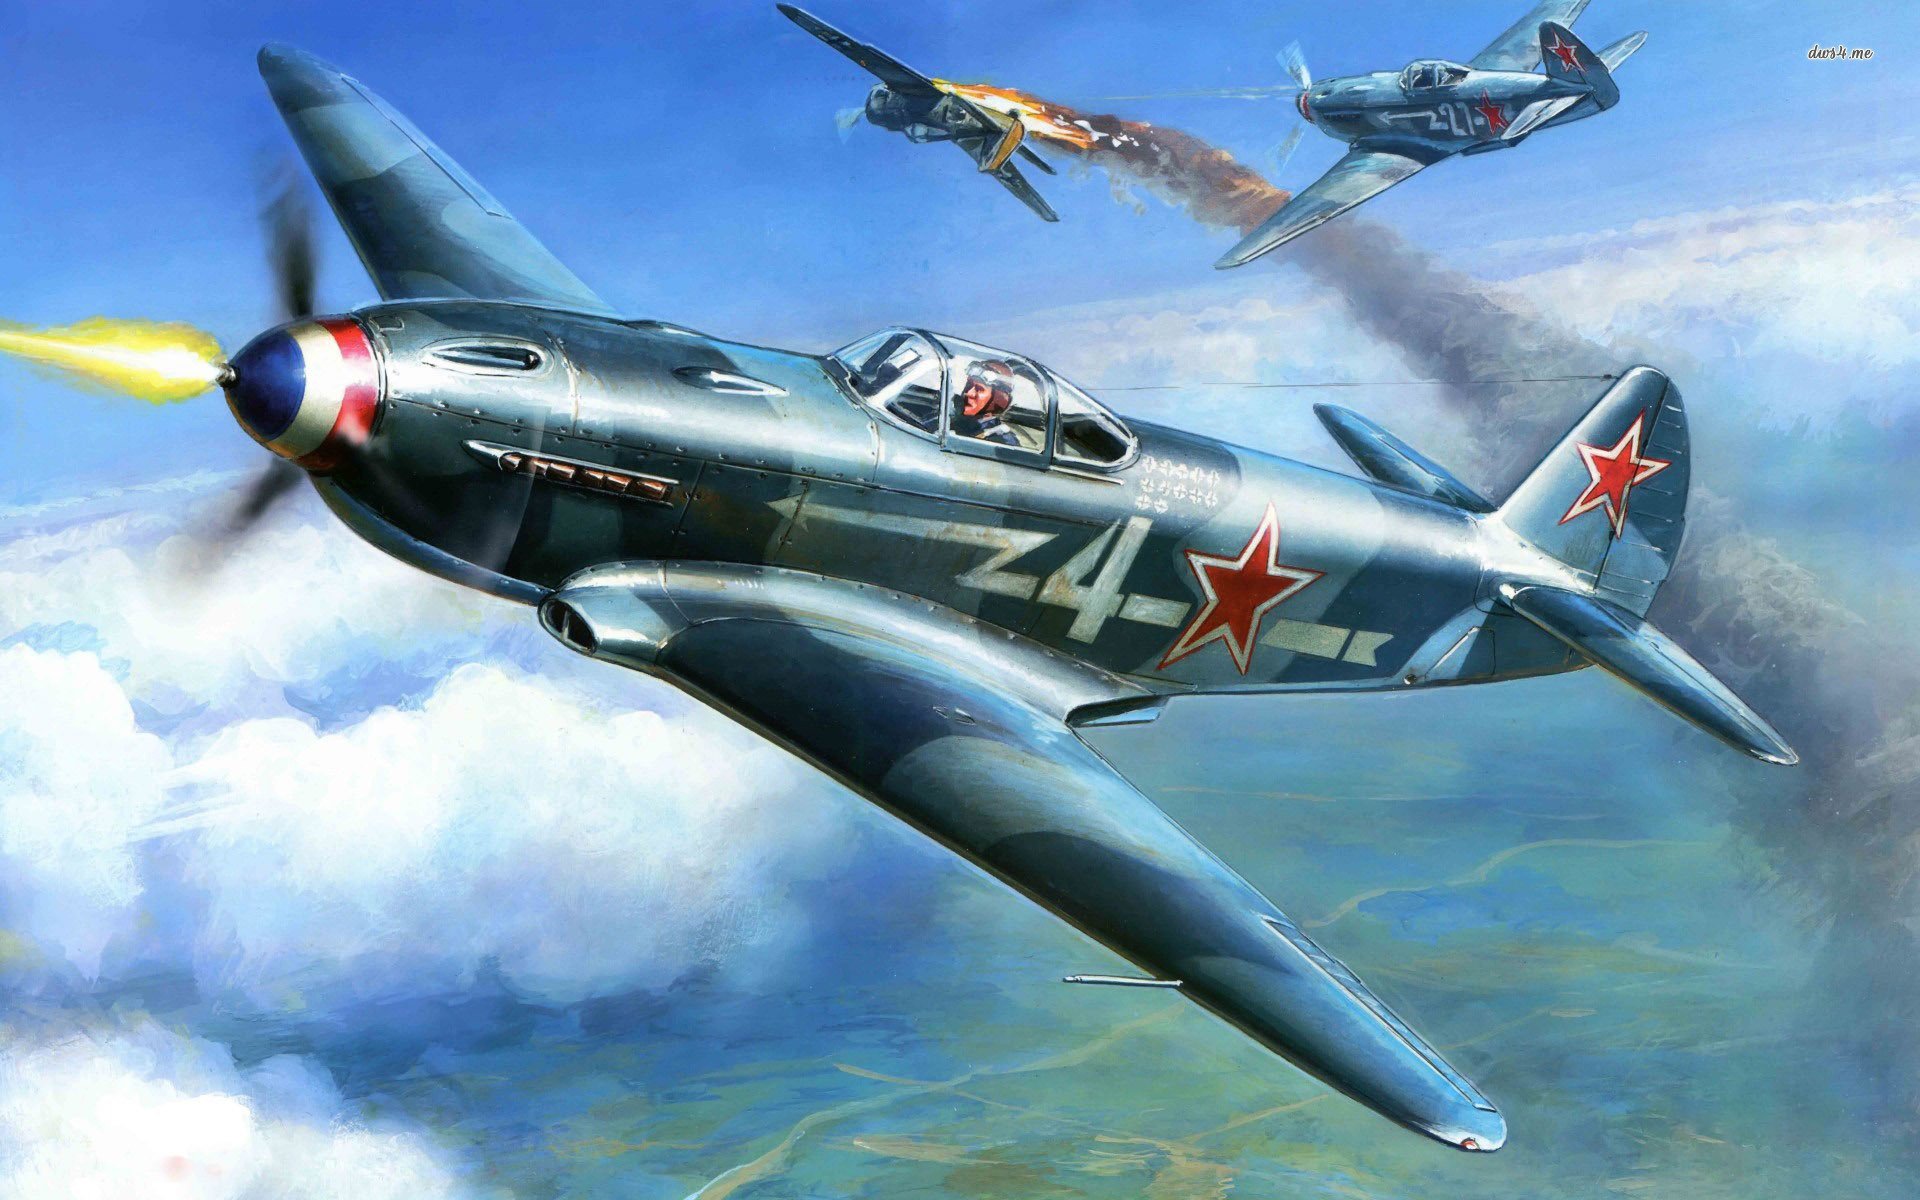 Yakovlev Yak-3 Wallpapers